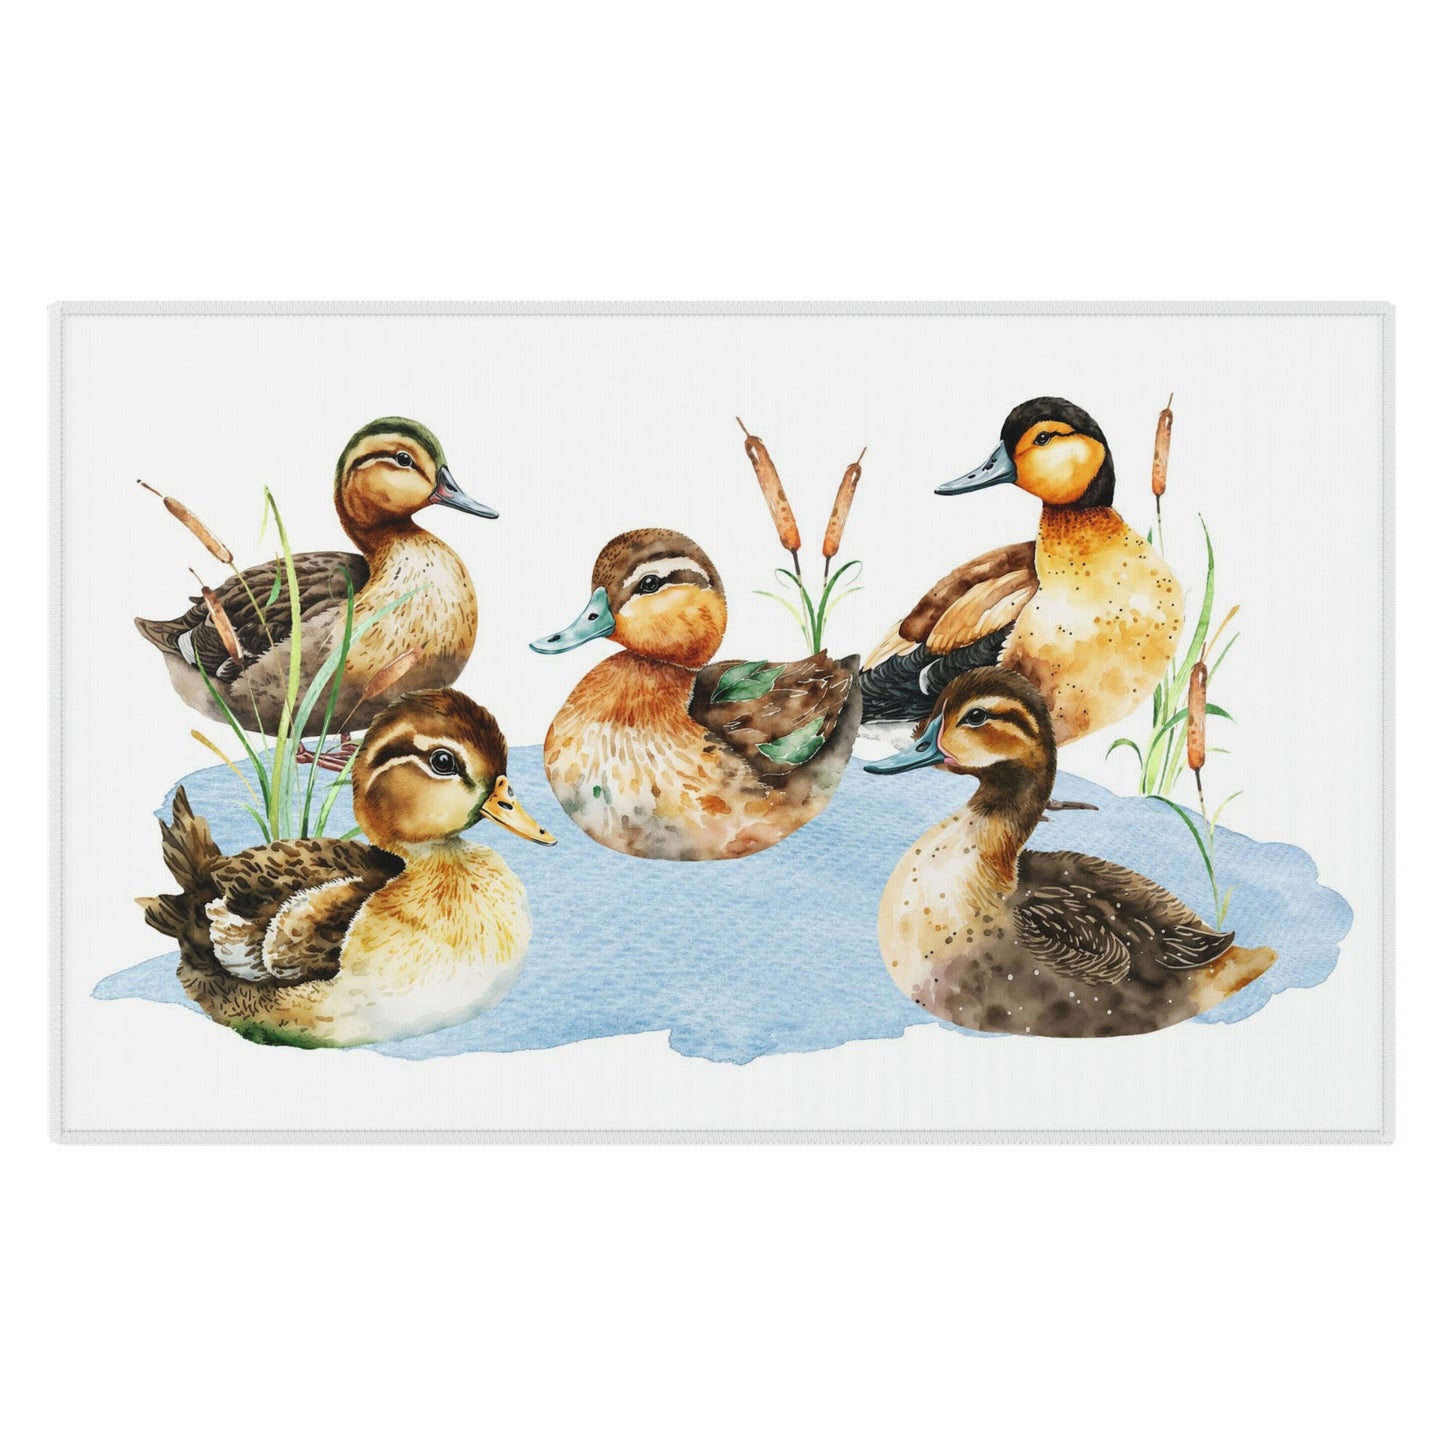 Ducks nursery Rug, Mallard duck rug, Anti-slip backing, Duck nursery decor - Little Ducklings